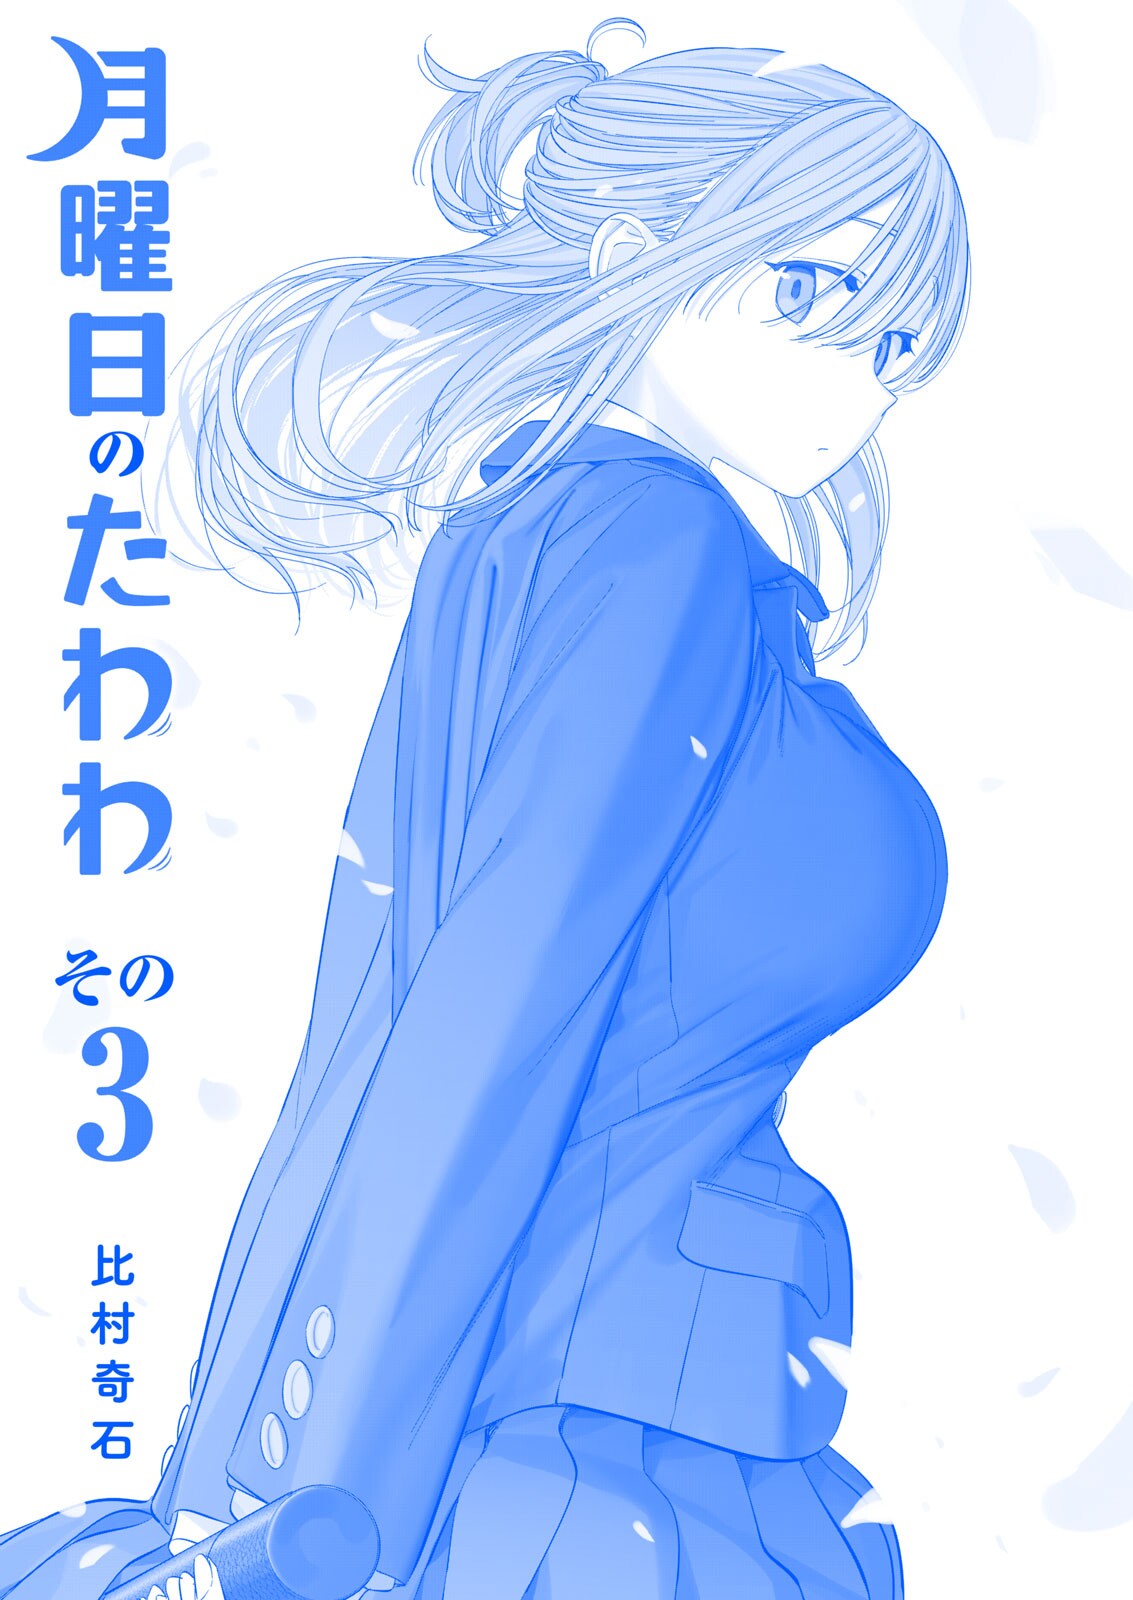 Getsuyoubi No Tawawa (Serialization) (Blue) (Fan Colored) Novel, Chapter 87  - Novel Cool - Best online light novel reading website